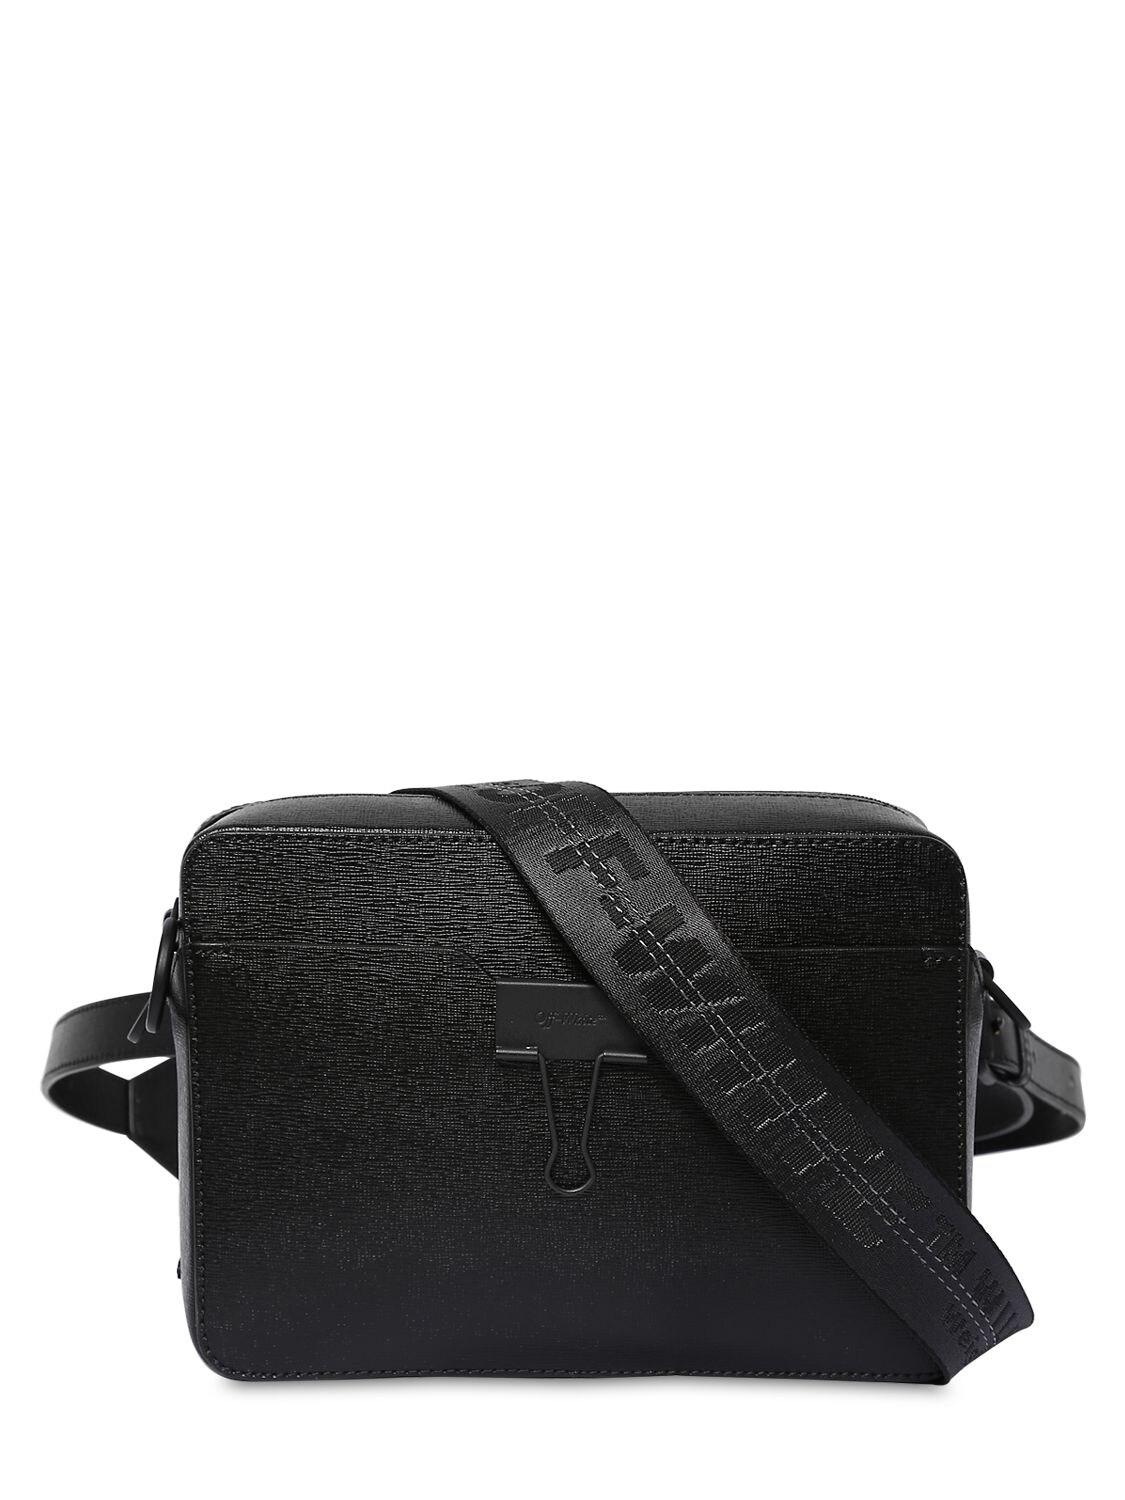 Off-White c/o Virgil Abloh Leather Camera Bag in Black for Men - Lyst